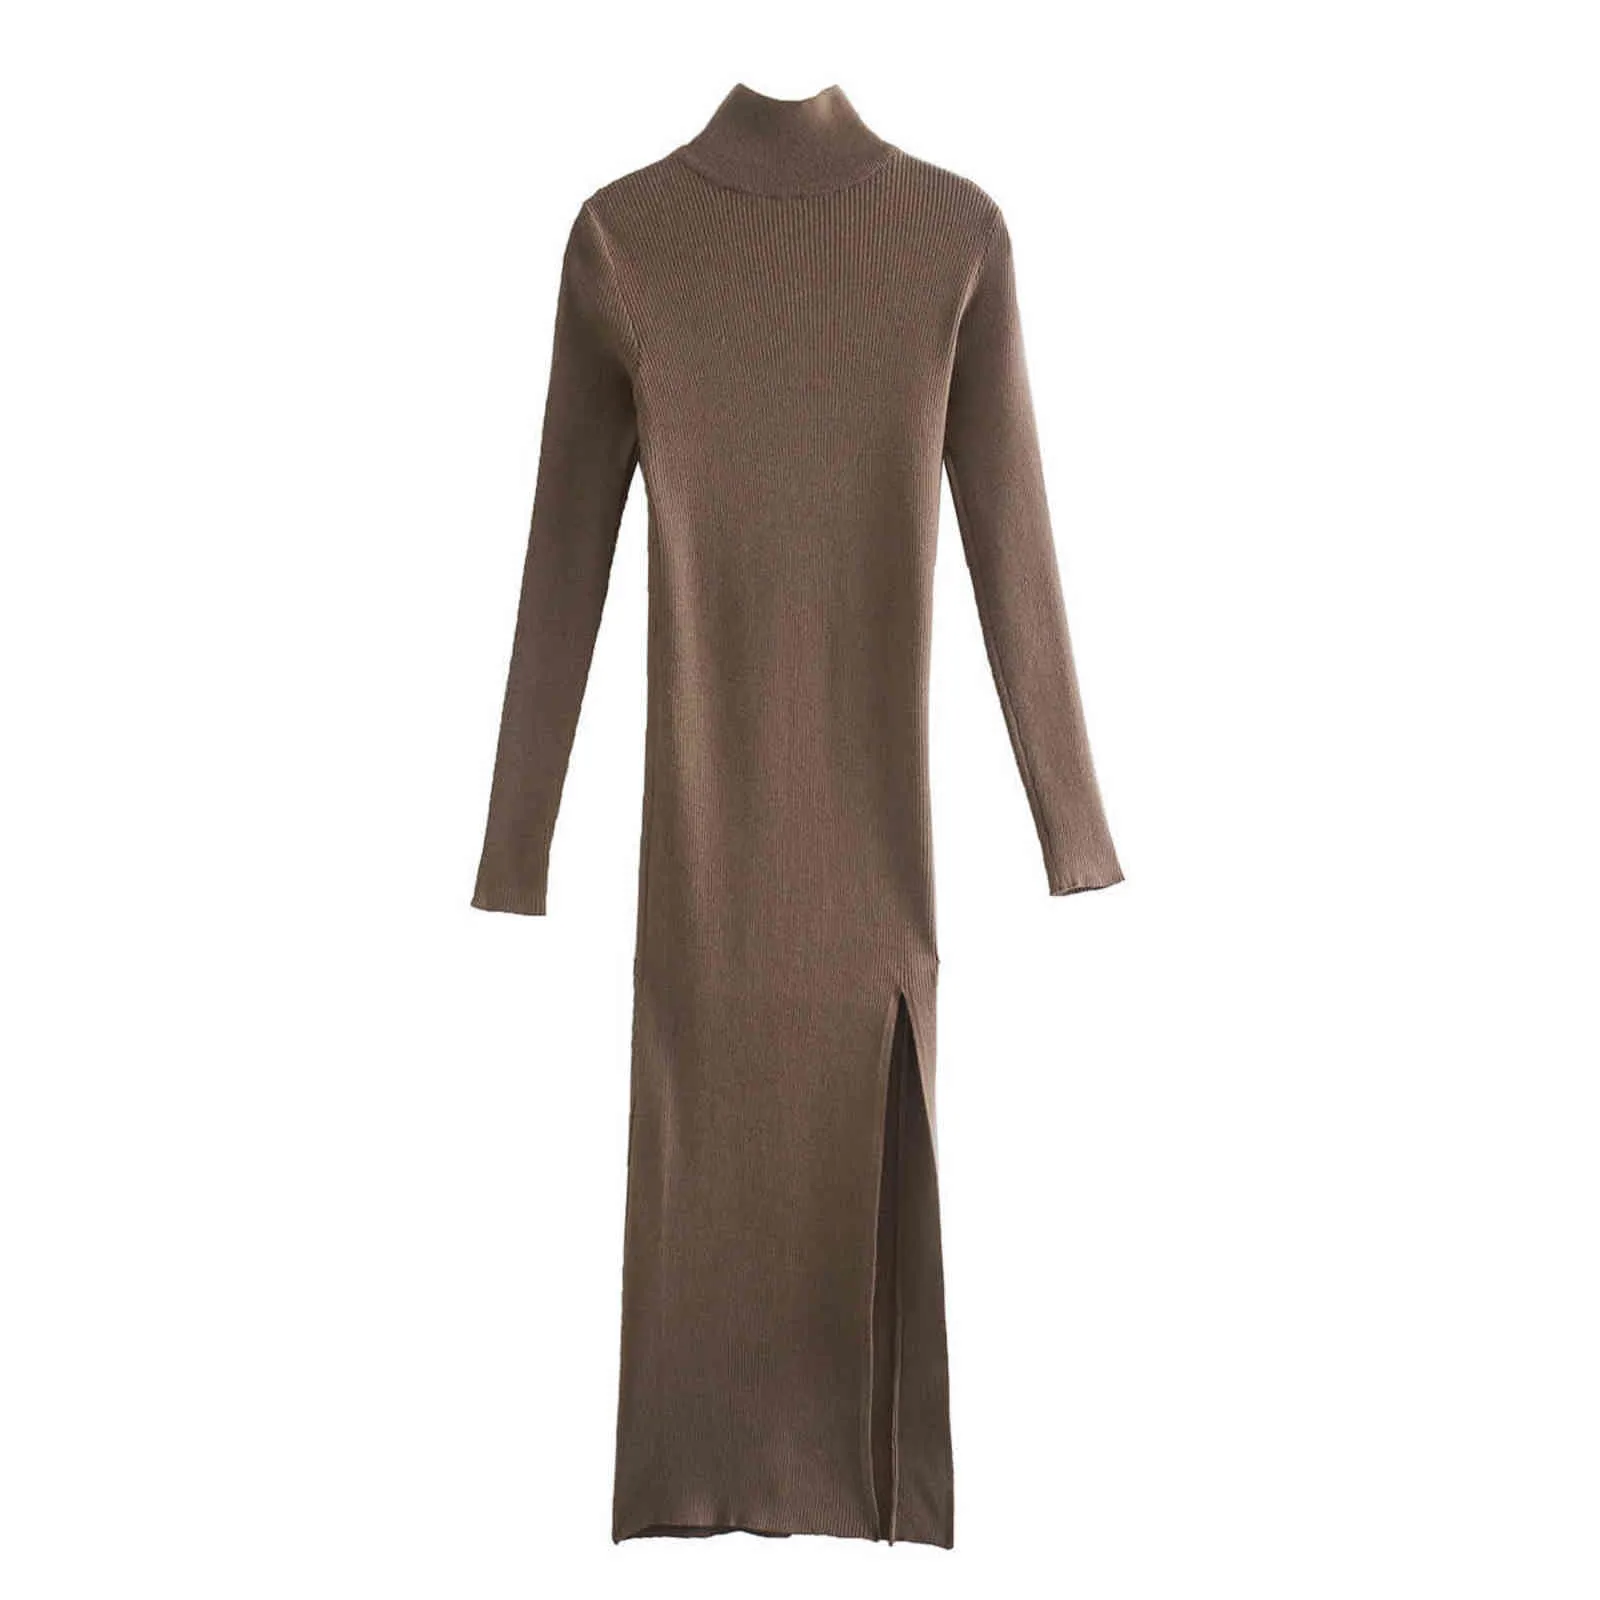 Dress Women Long Sleeves High-Neck Elastic Midi Dress Fashion Elegant Chic Lady Knit Sweater Dresses Women robe femme 211110